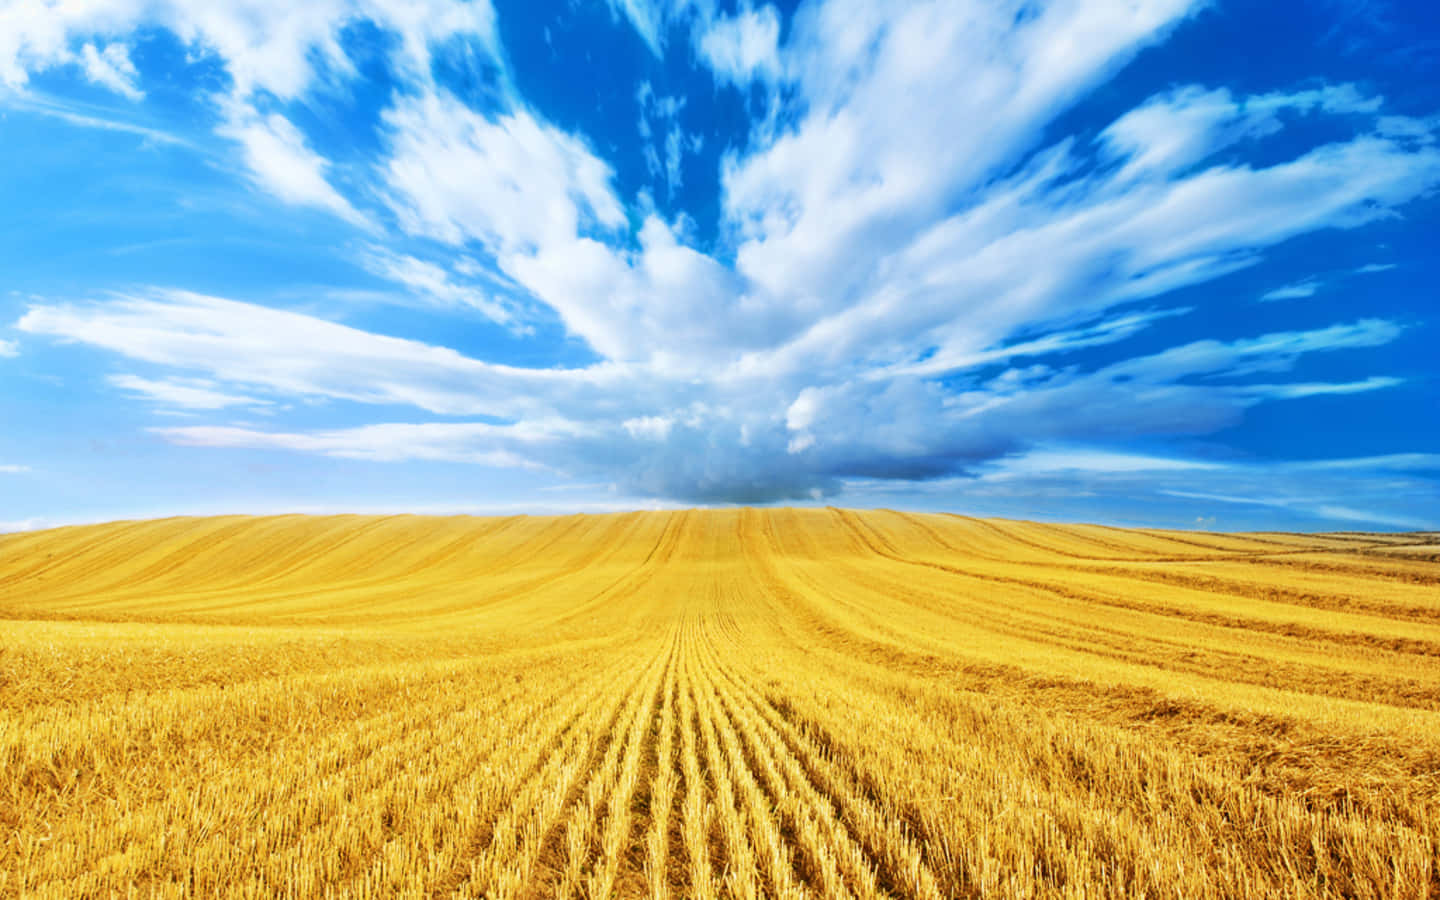 Golden Wheat Harvest in the Field Wallpaper